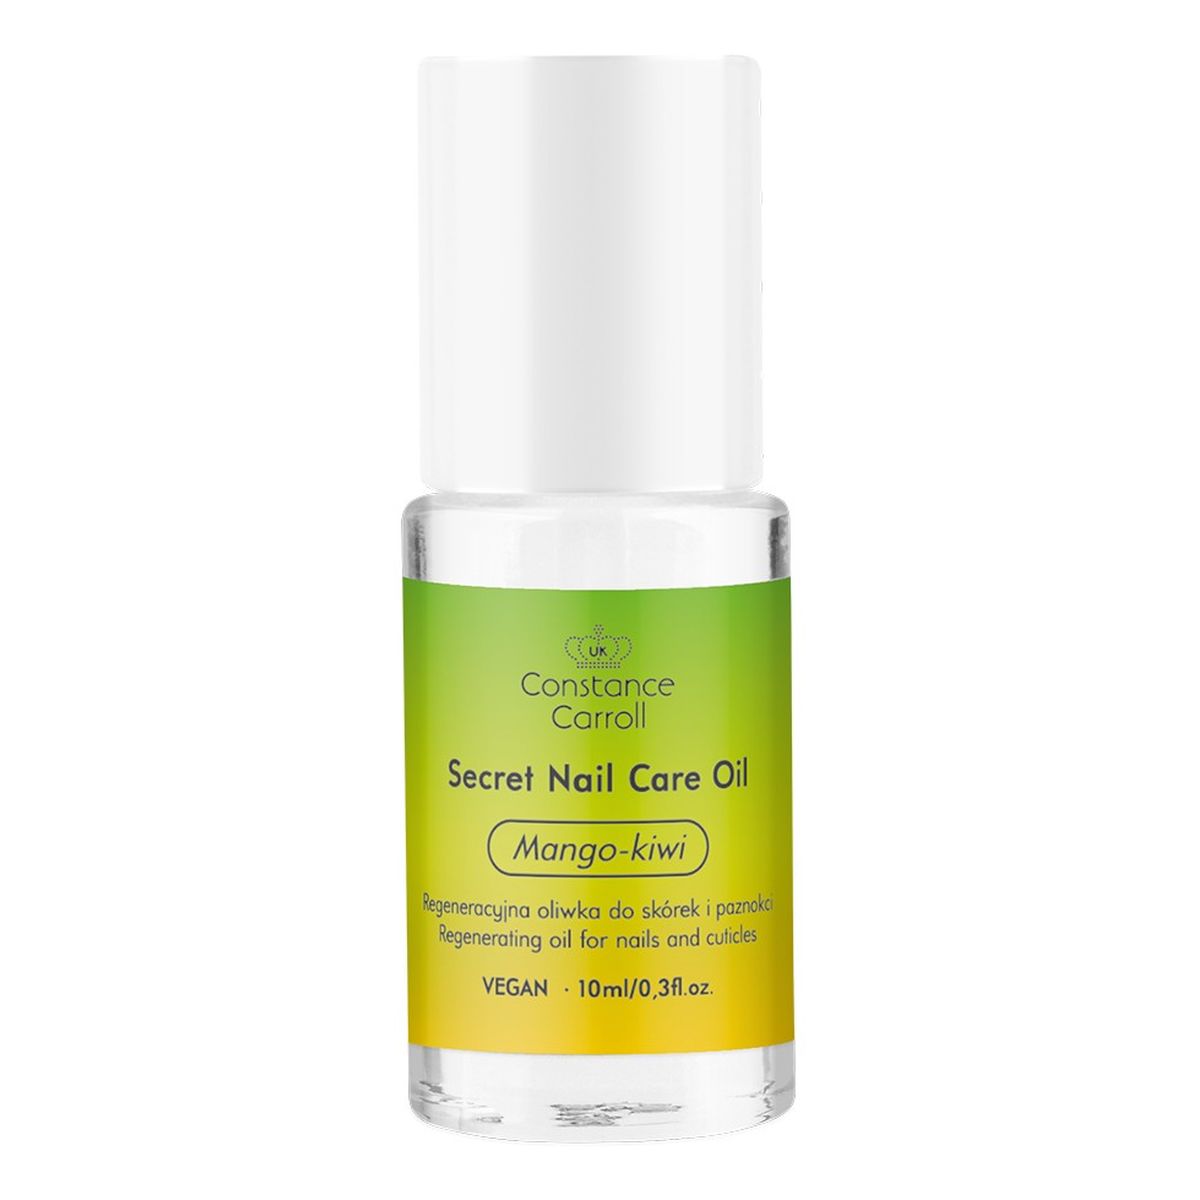 Constance Carroll Secret Nail Care Oil Regeneracyjna Oliwka do skórek i paznokci - Mango&Kiwi 10ml